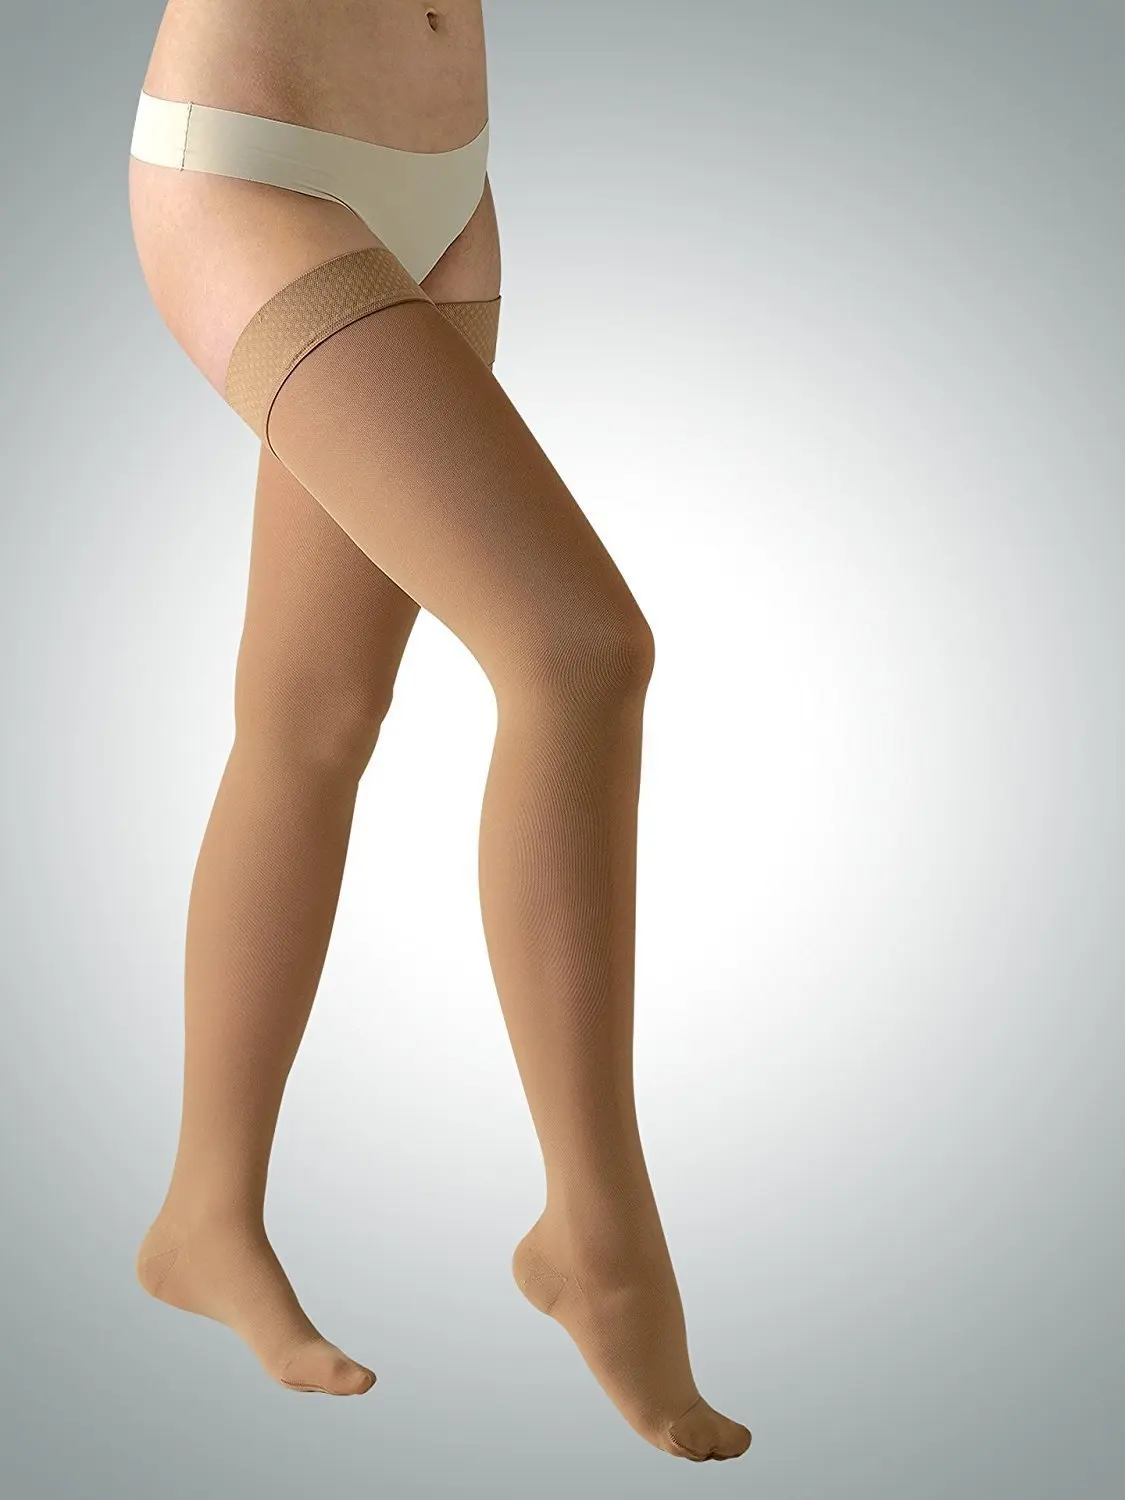 compression stockings for men atteler orthotics